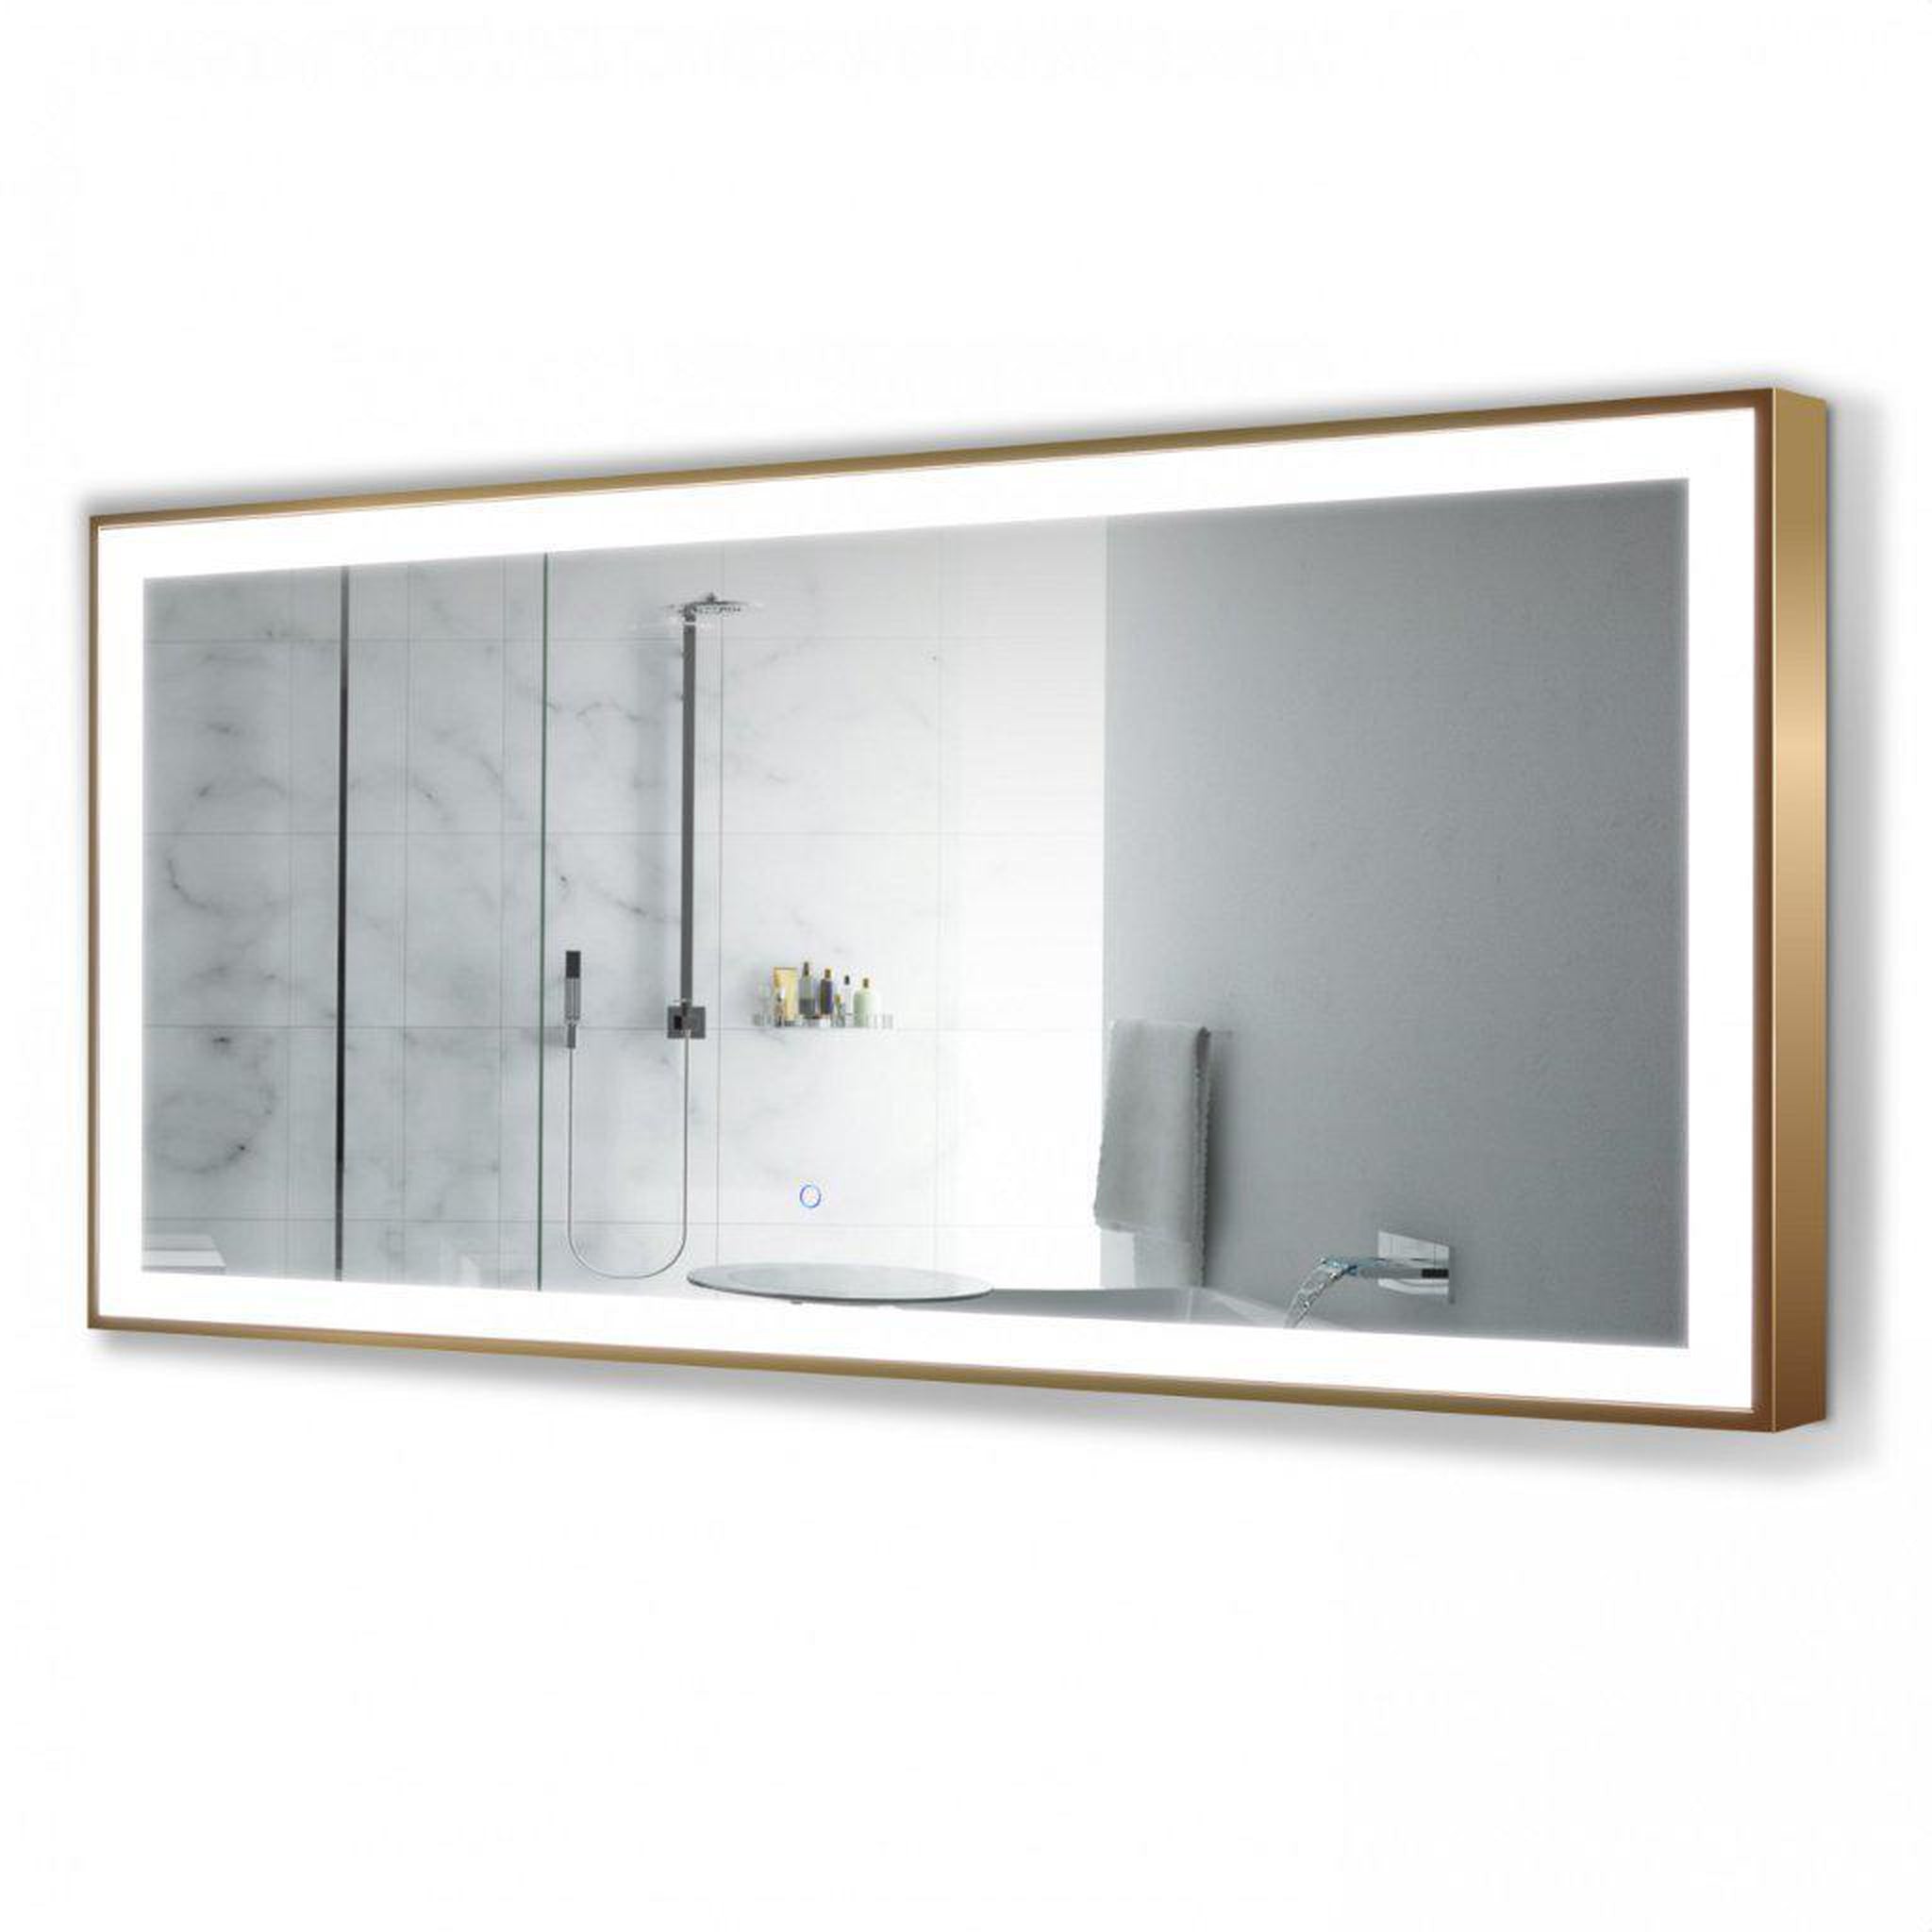 Krugg Reflections, Krugg Reflections Soho 60" x 30" 5000K Rectangular Matte Gold Wall-Mounted Framed LED Bathroom Vanity Mirror With Built-in Defogger and Dimmer